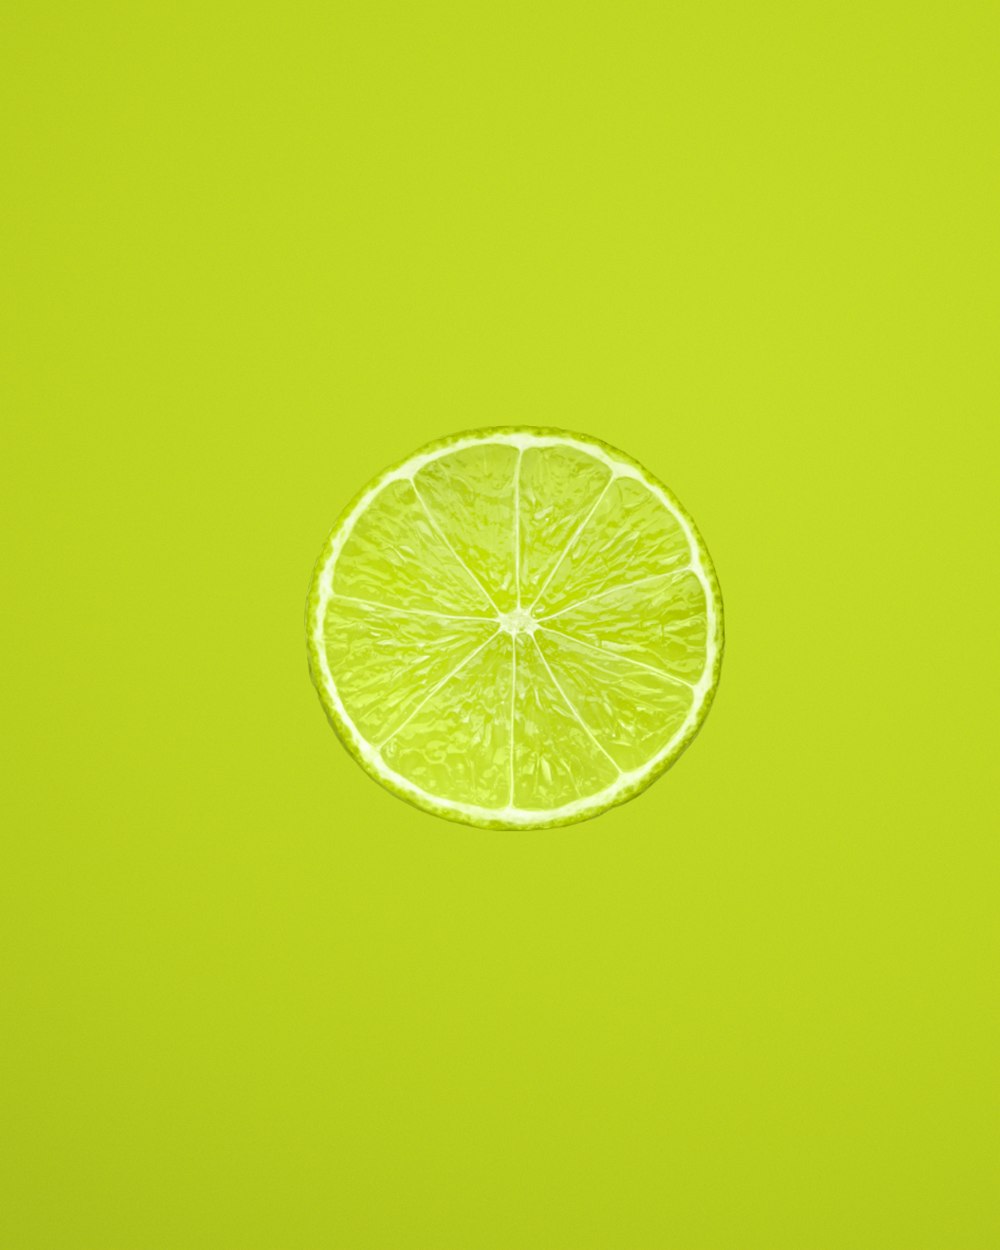 yellow lemon fruit on green background